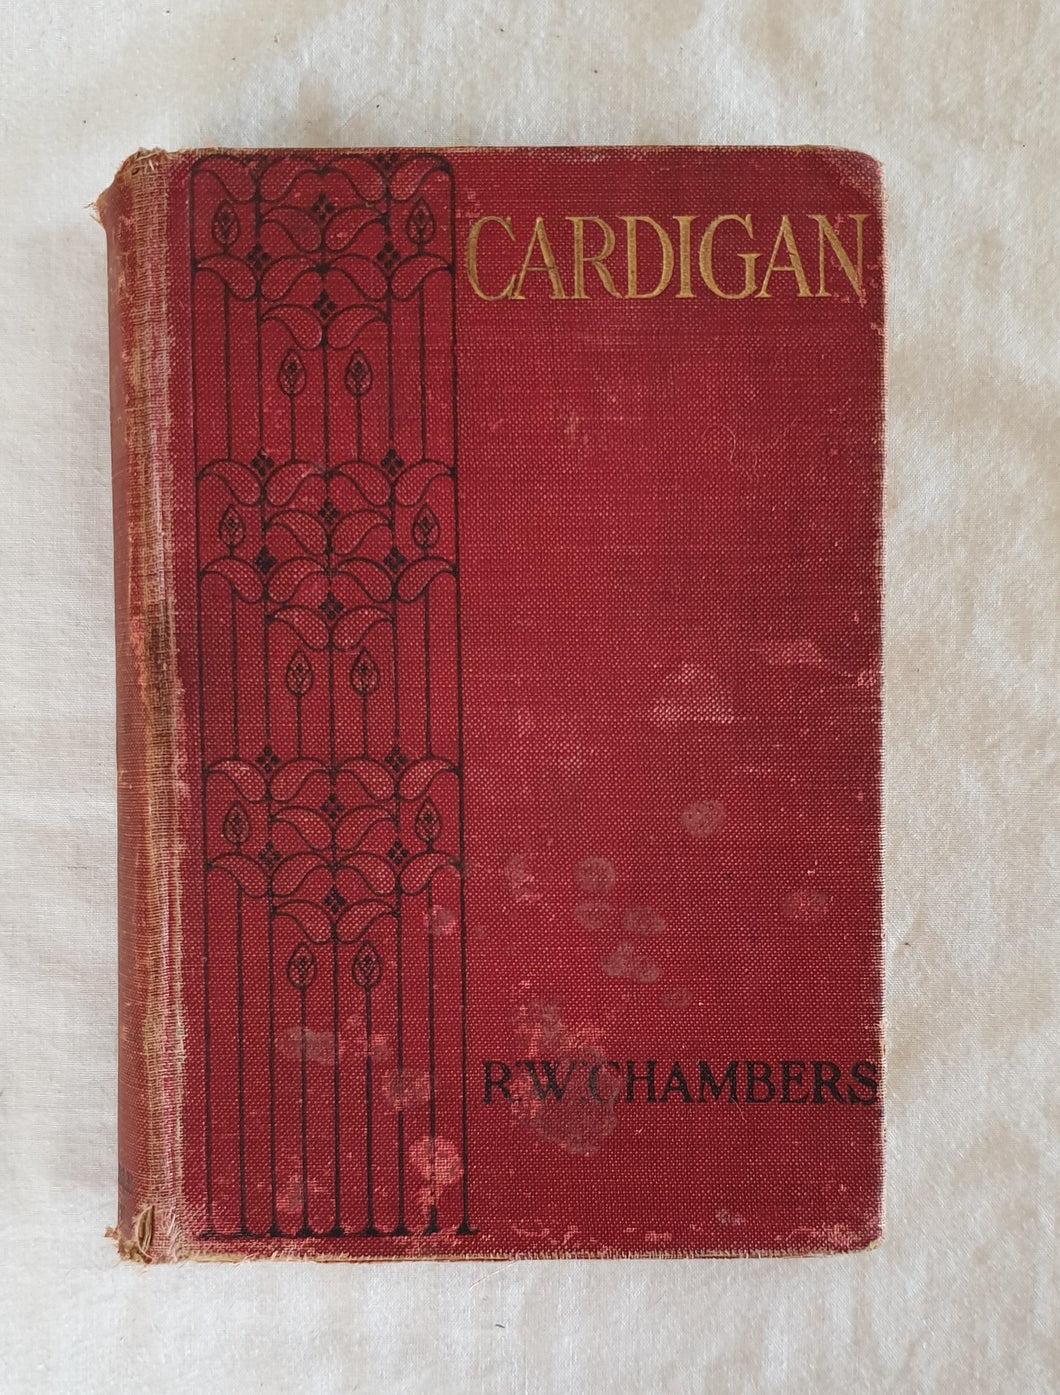 Cardigan A Novel by Robert W. Chambers